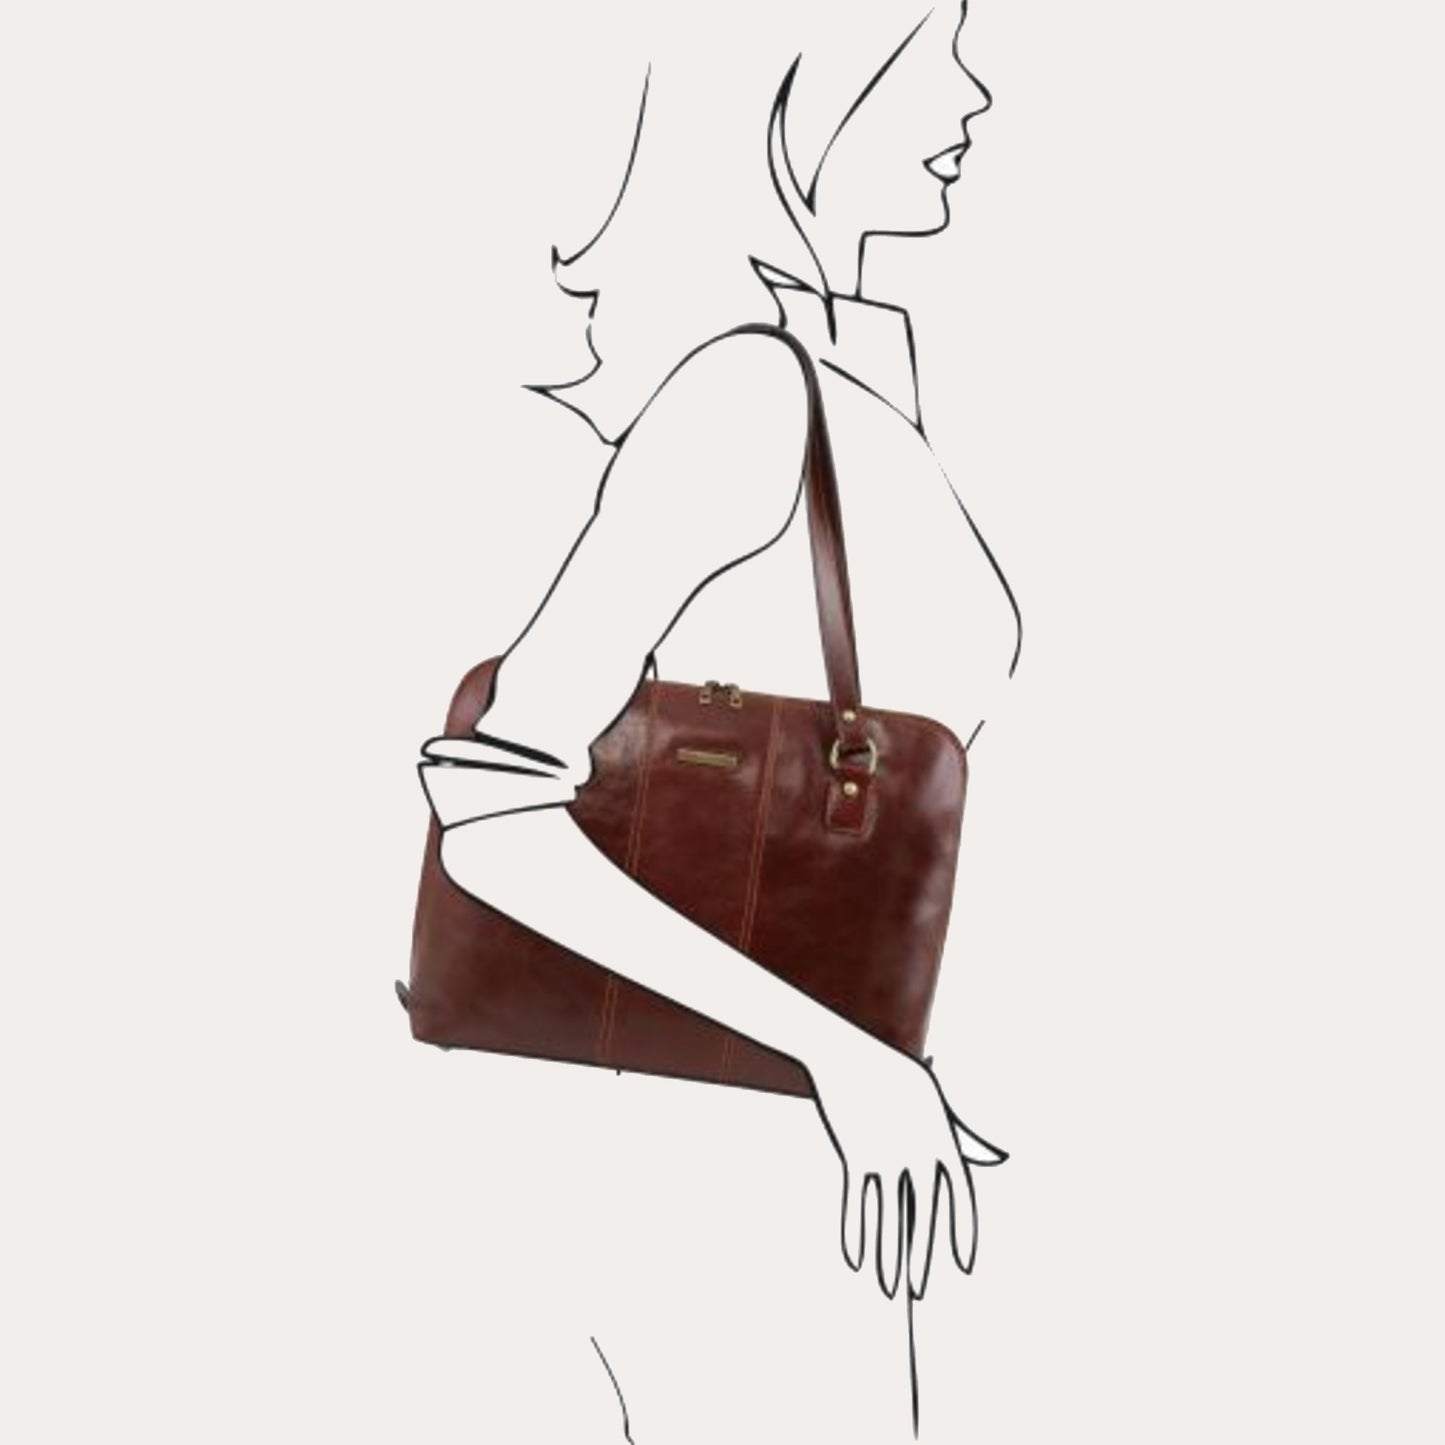 Tuscany Leather Brown Leather Shoulder Bag